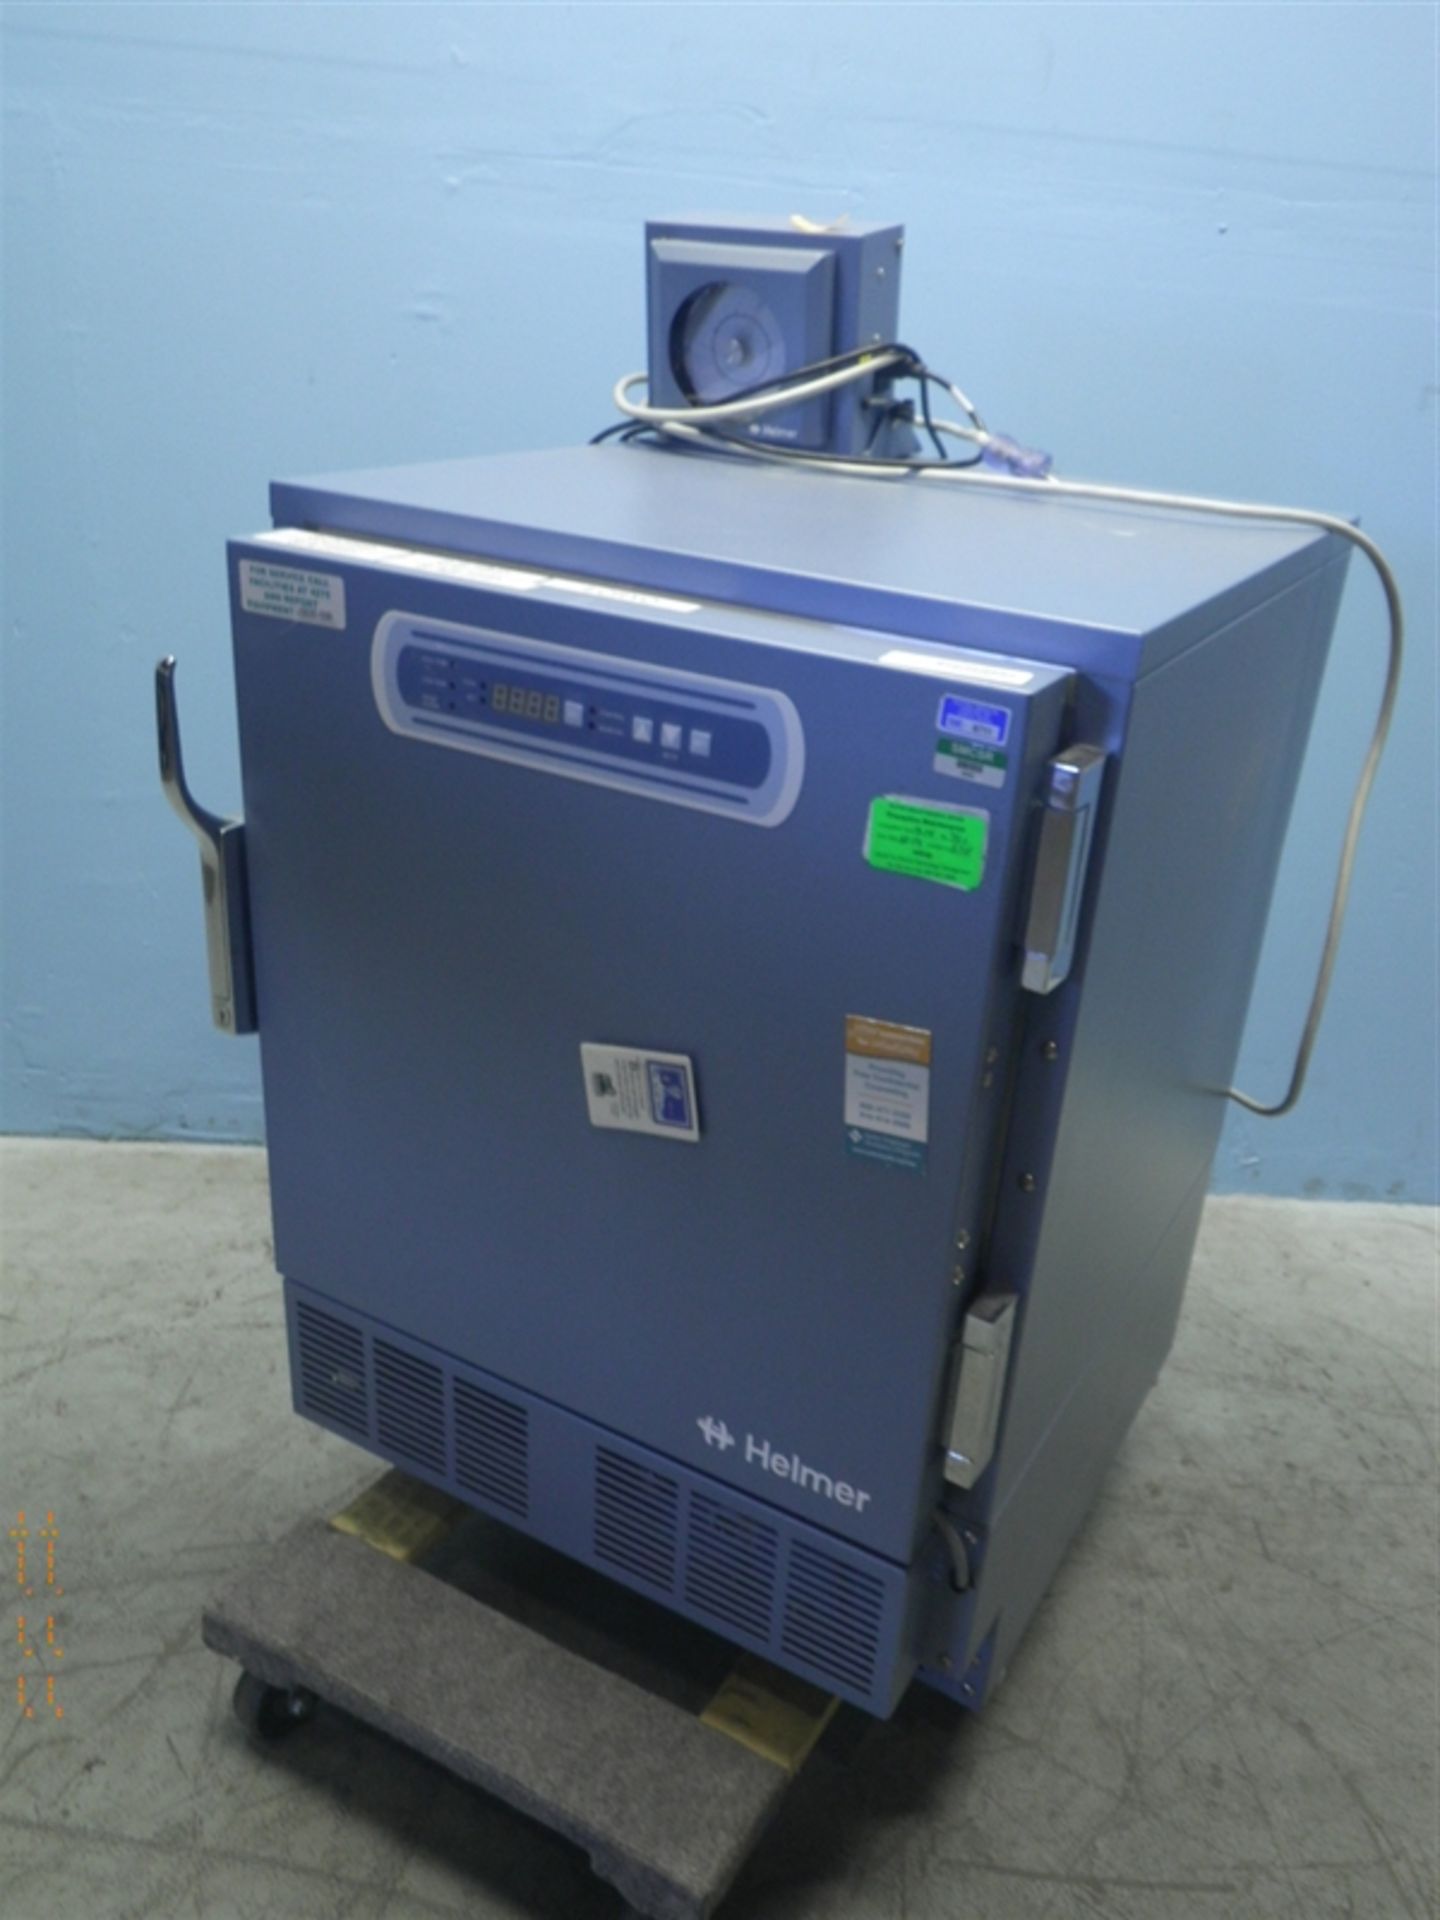 Helmer HPF105 plasma freezer